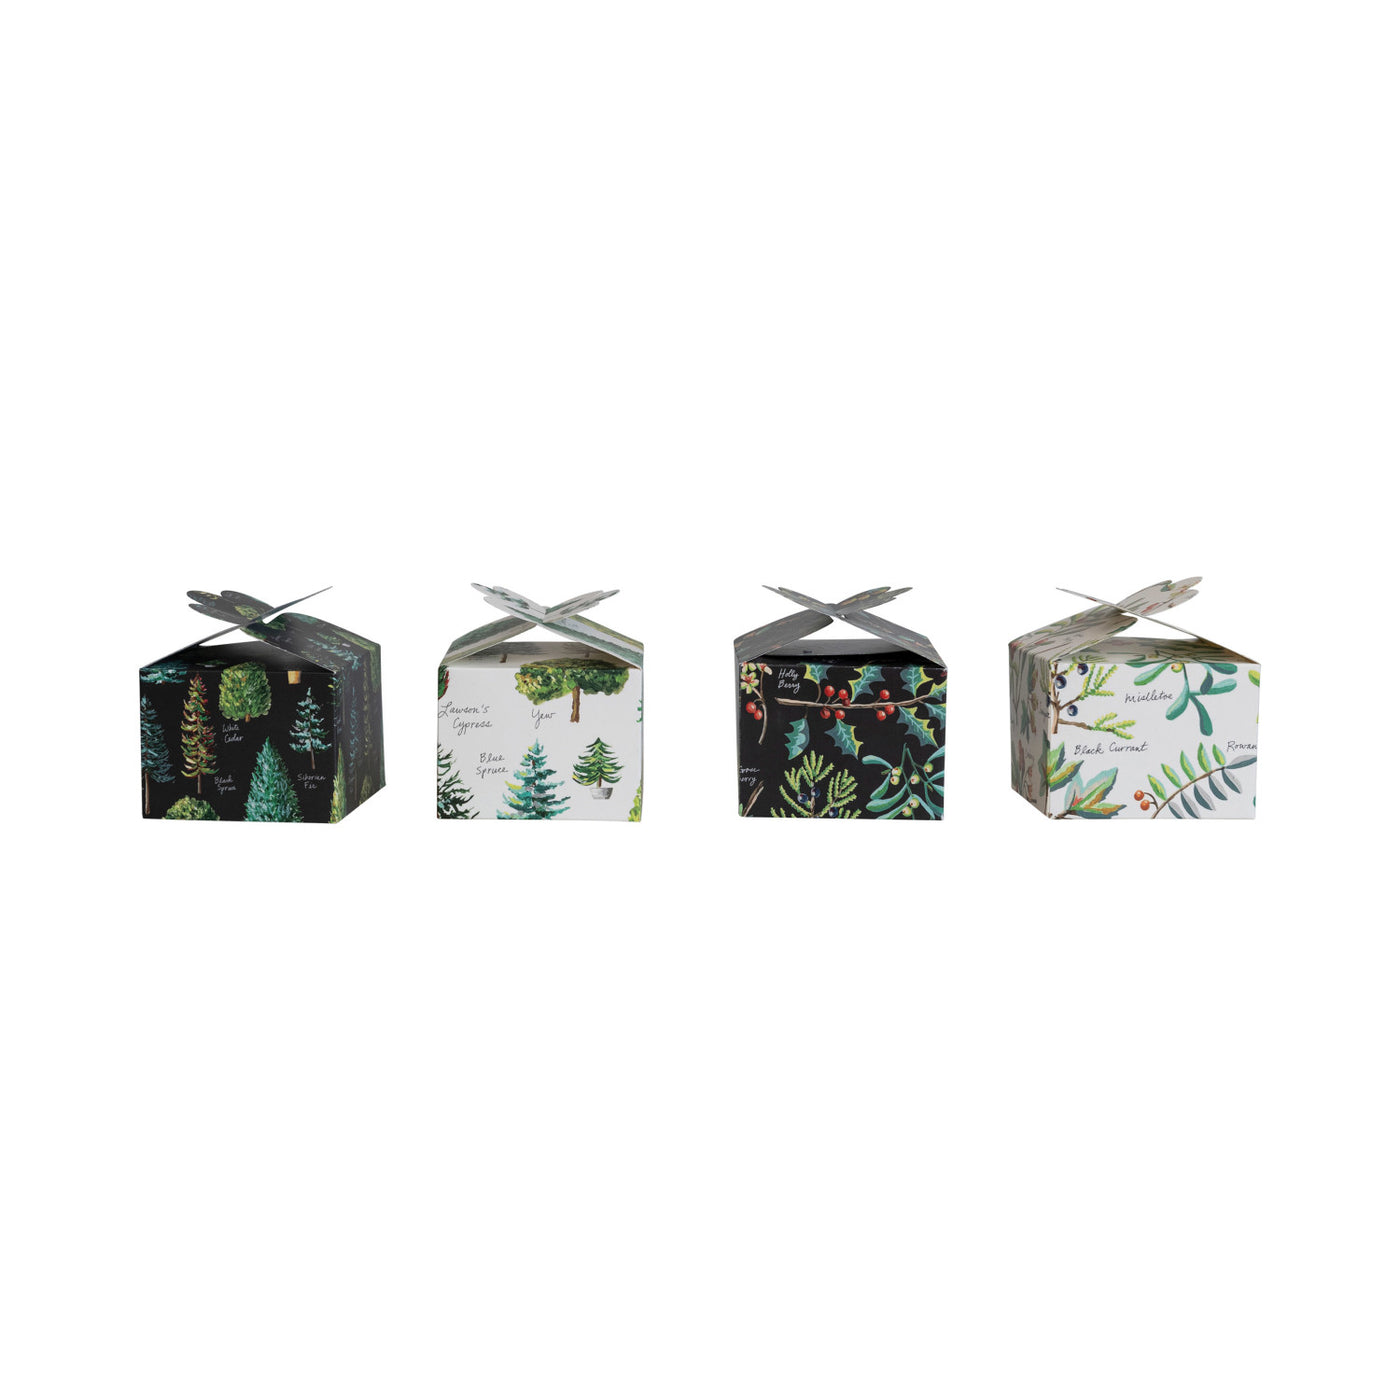 4" Square x 3"H Recycled Paper Interlocking Gift Box w/ Evergreen Botanicals